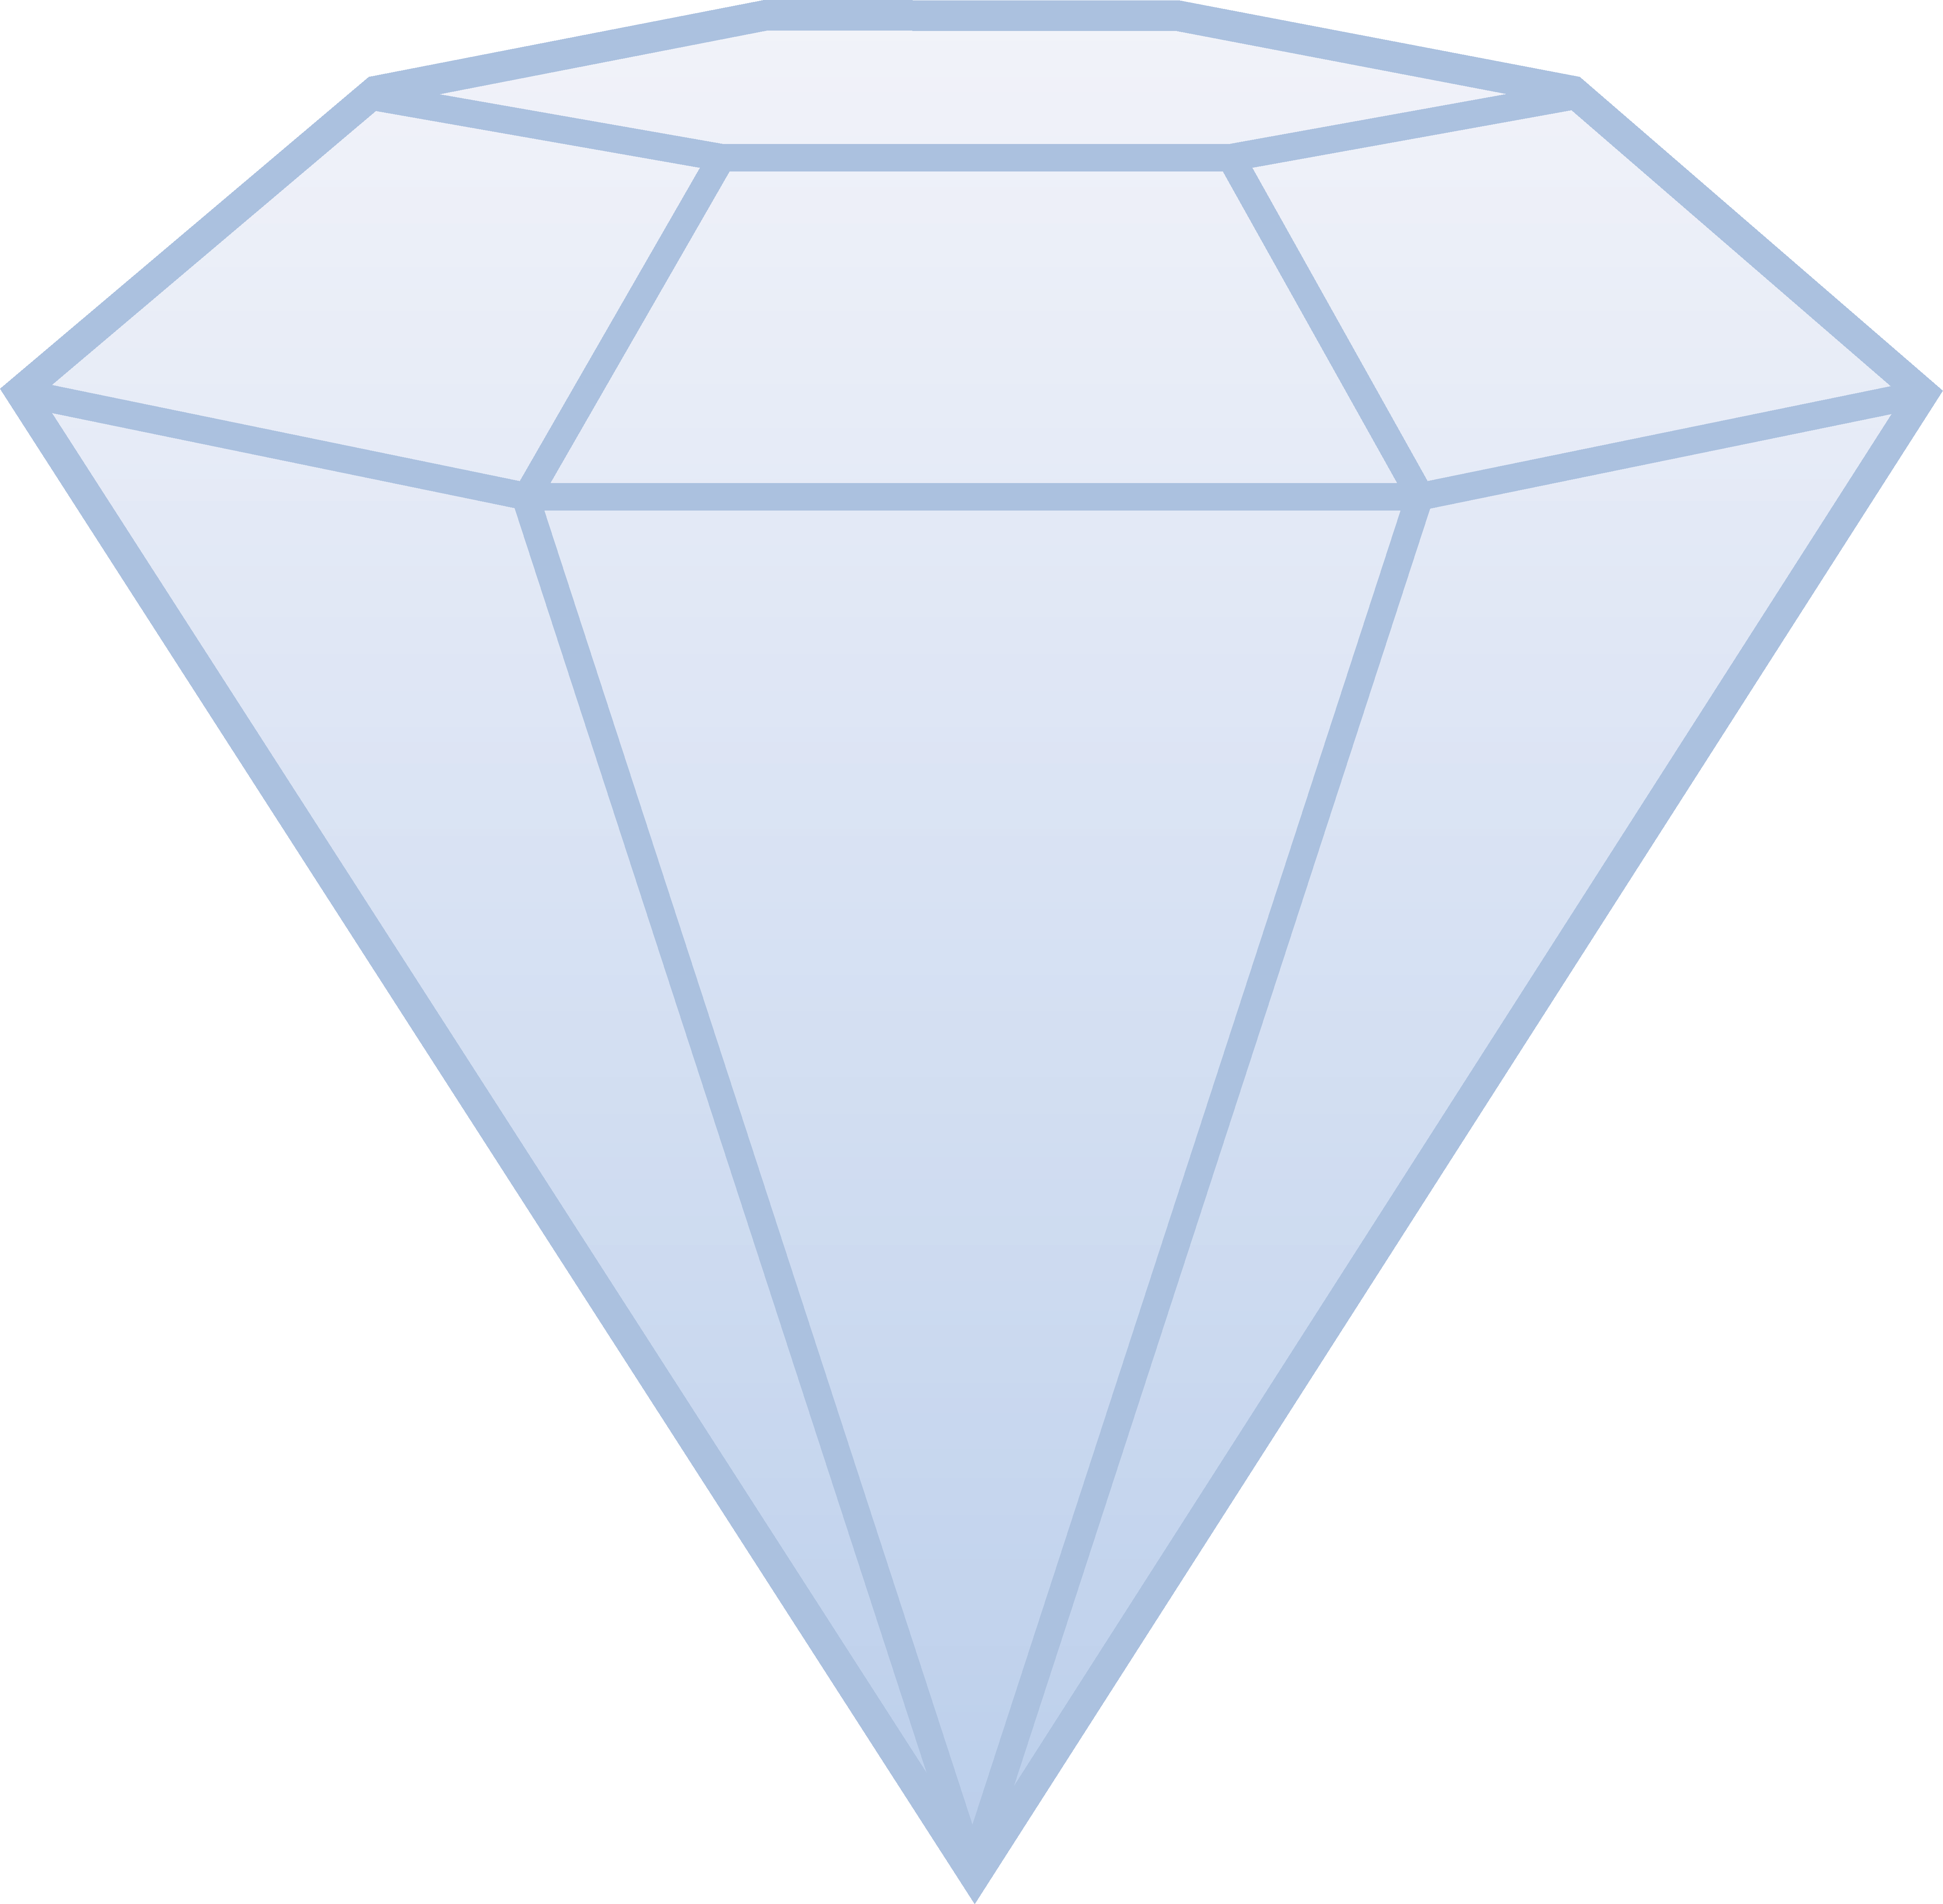 Diamond design free clip art